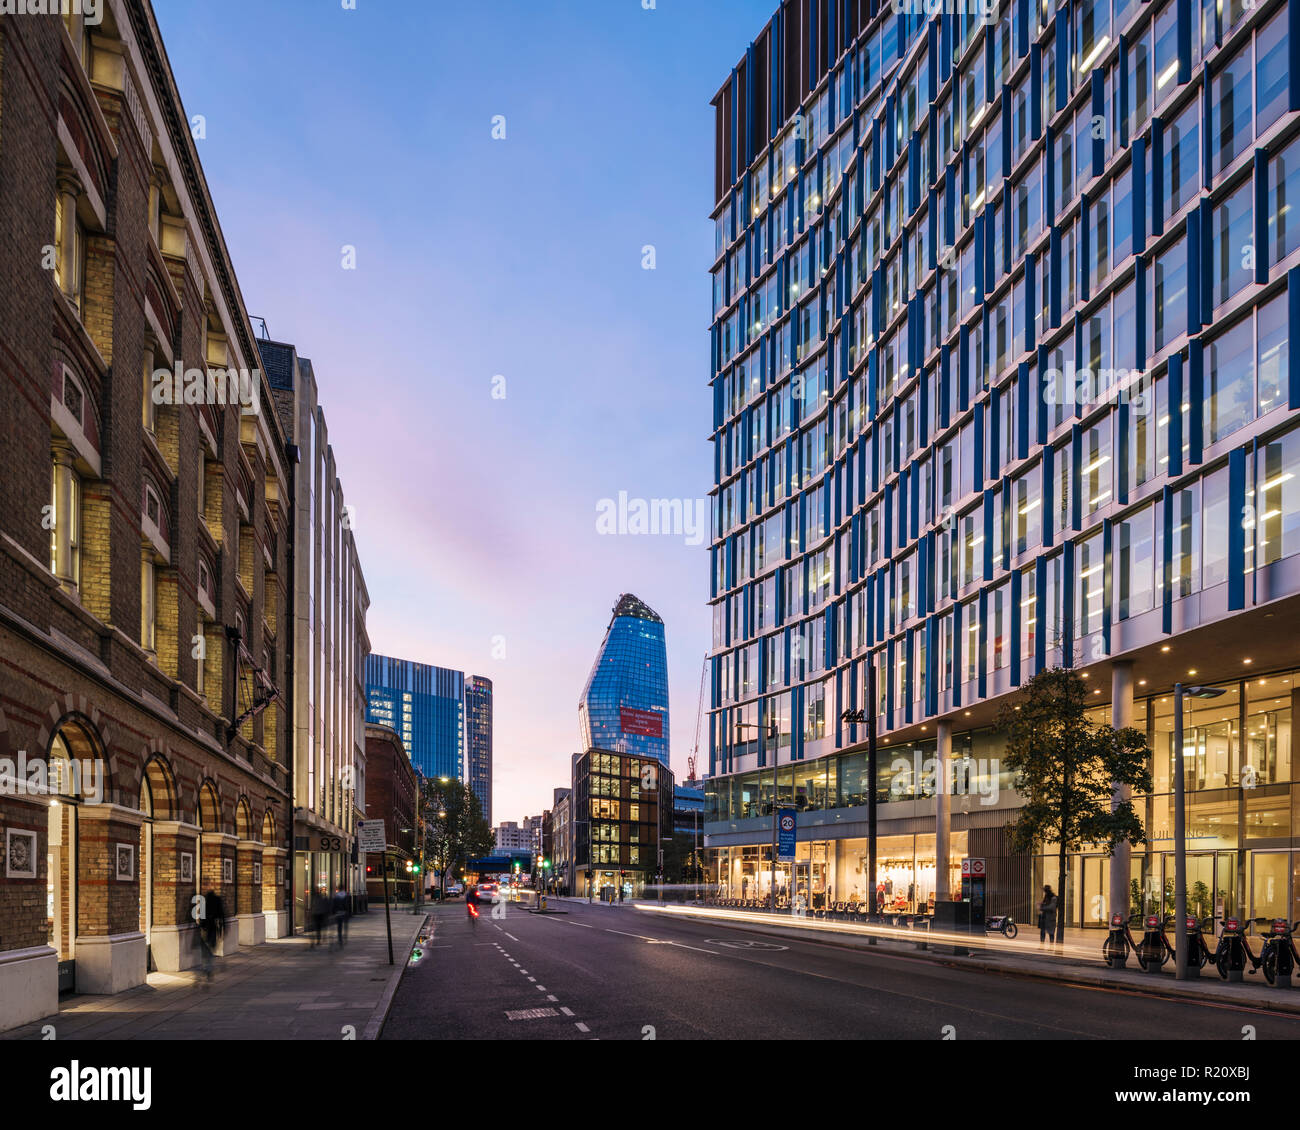 Exterior of Blue Fin Building at dusk, Southwark Street, London, UK Stock Photo